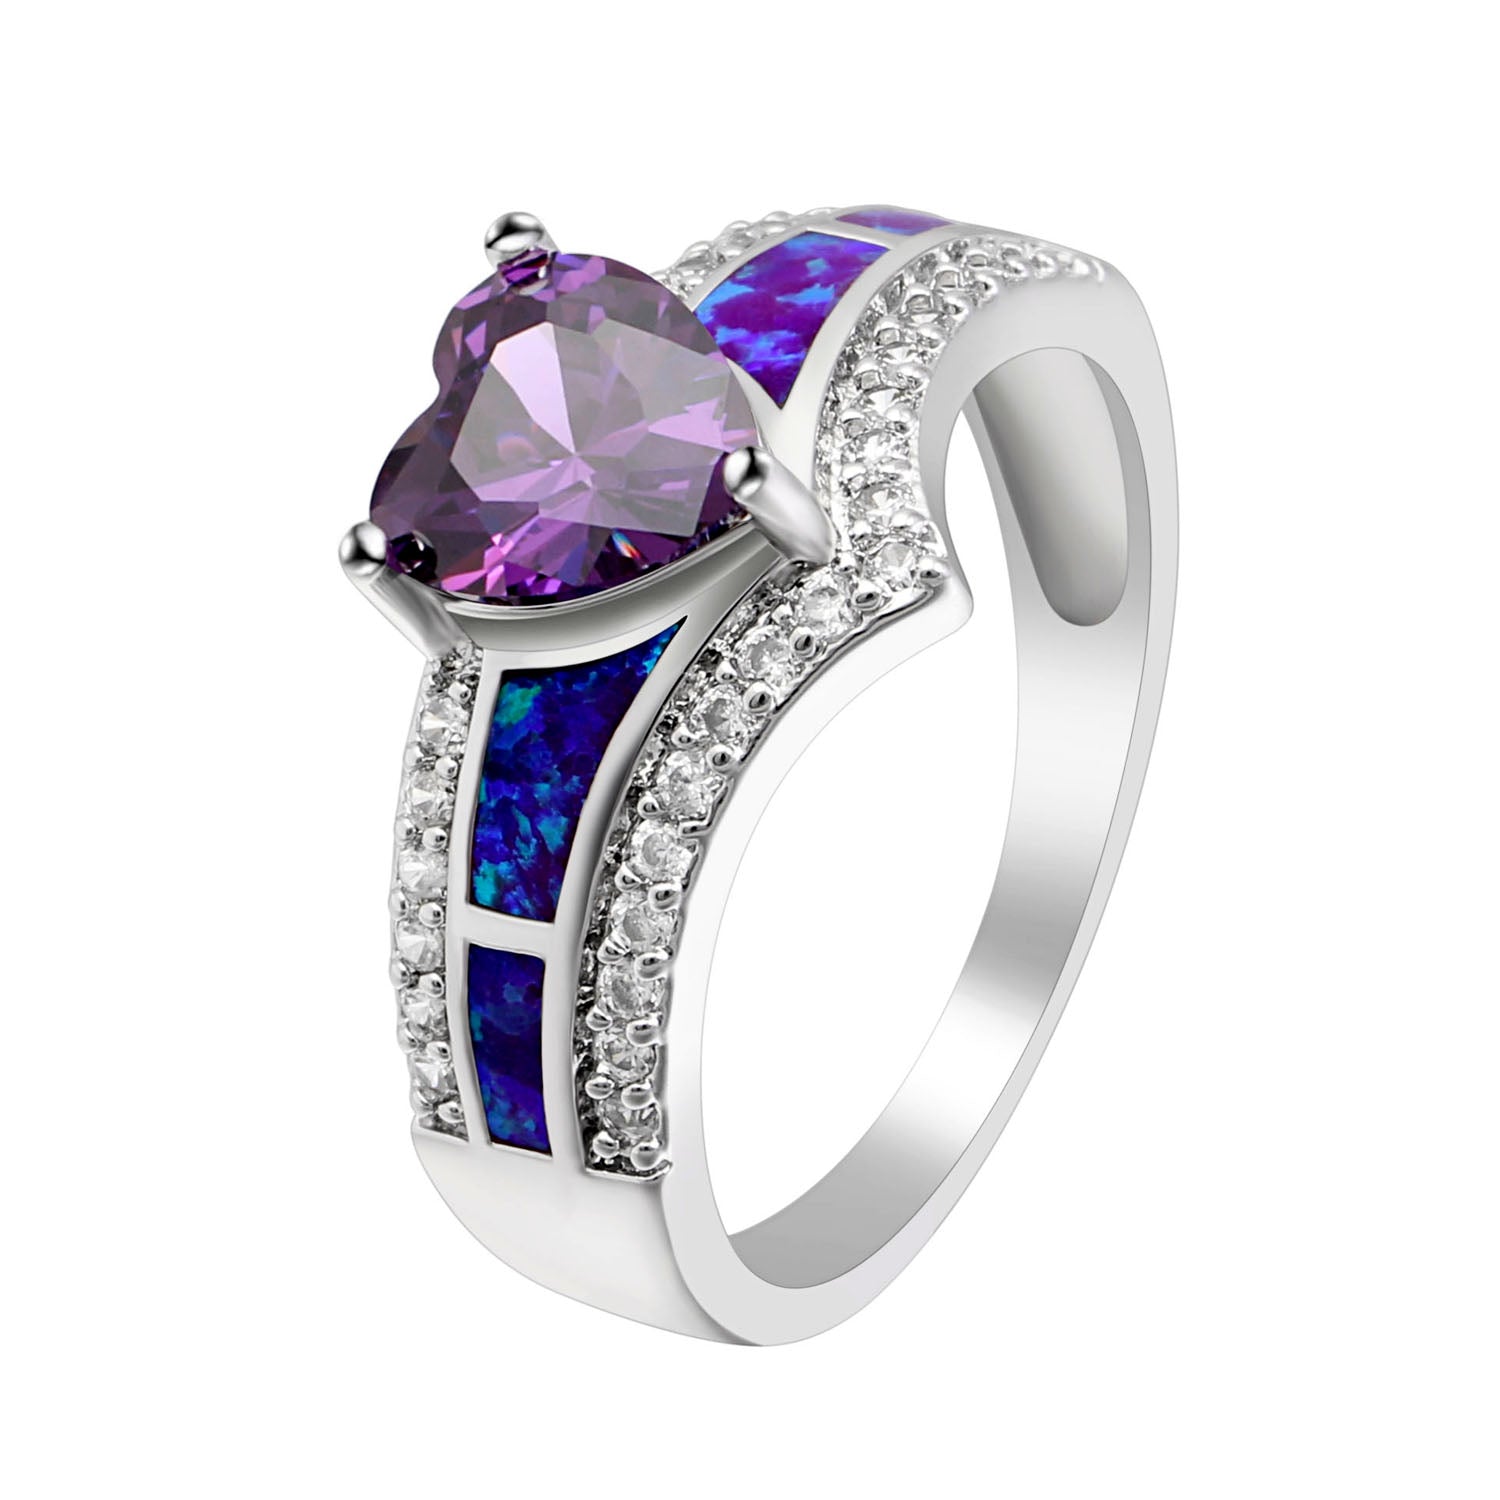 Majestic Heart Cz Promise Ring Created Fire Opal Girl Women Ginger Lyne - Purple,11